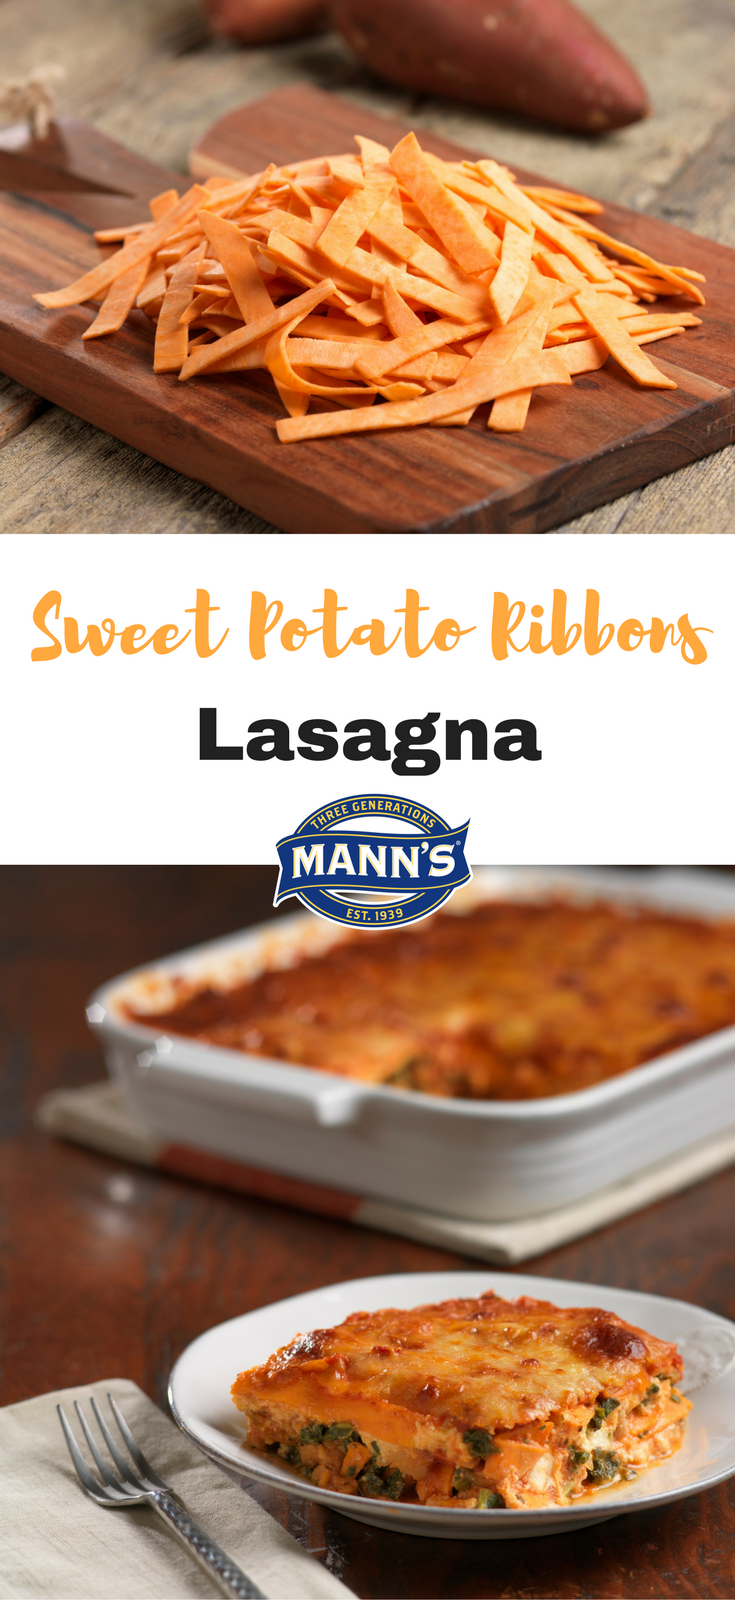 Sweet Potato Ribbons Lasagna | Mann's Fresh Vegetables {Gluten-Free}